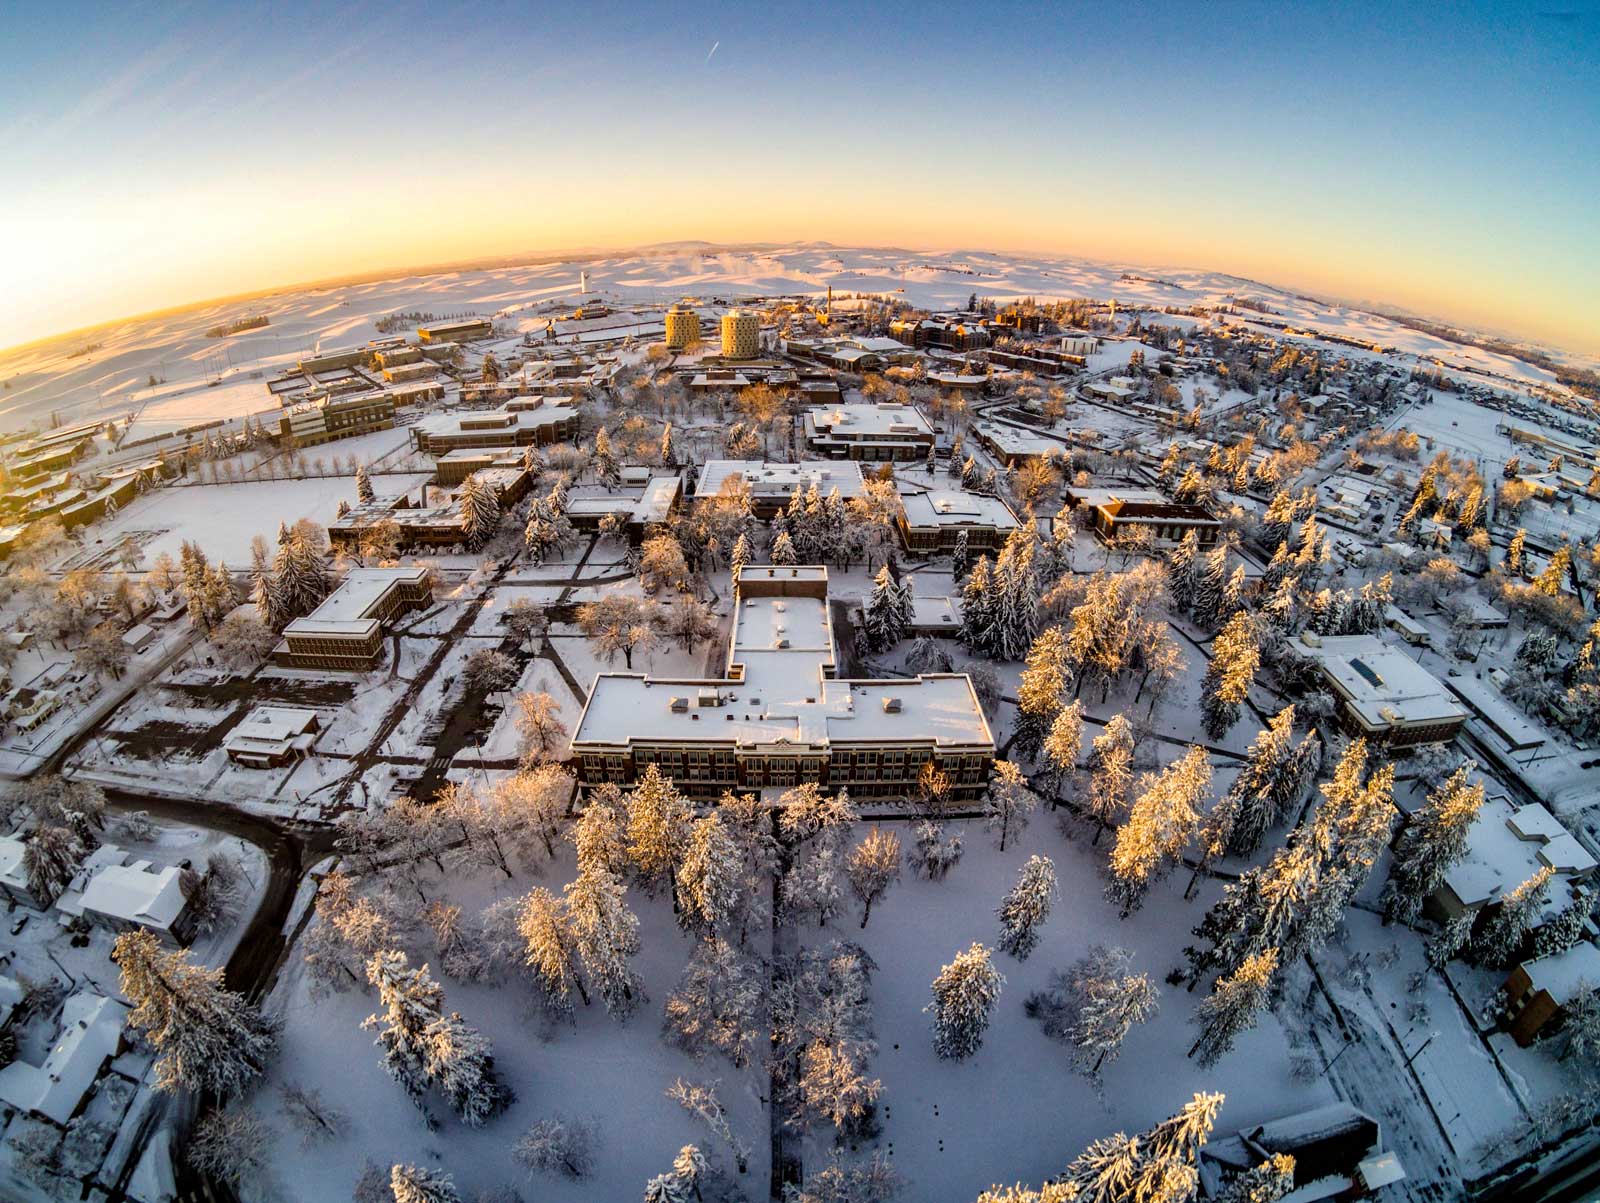 Snow covered campus